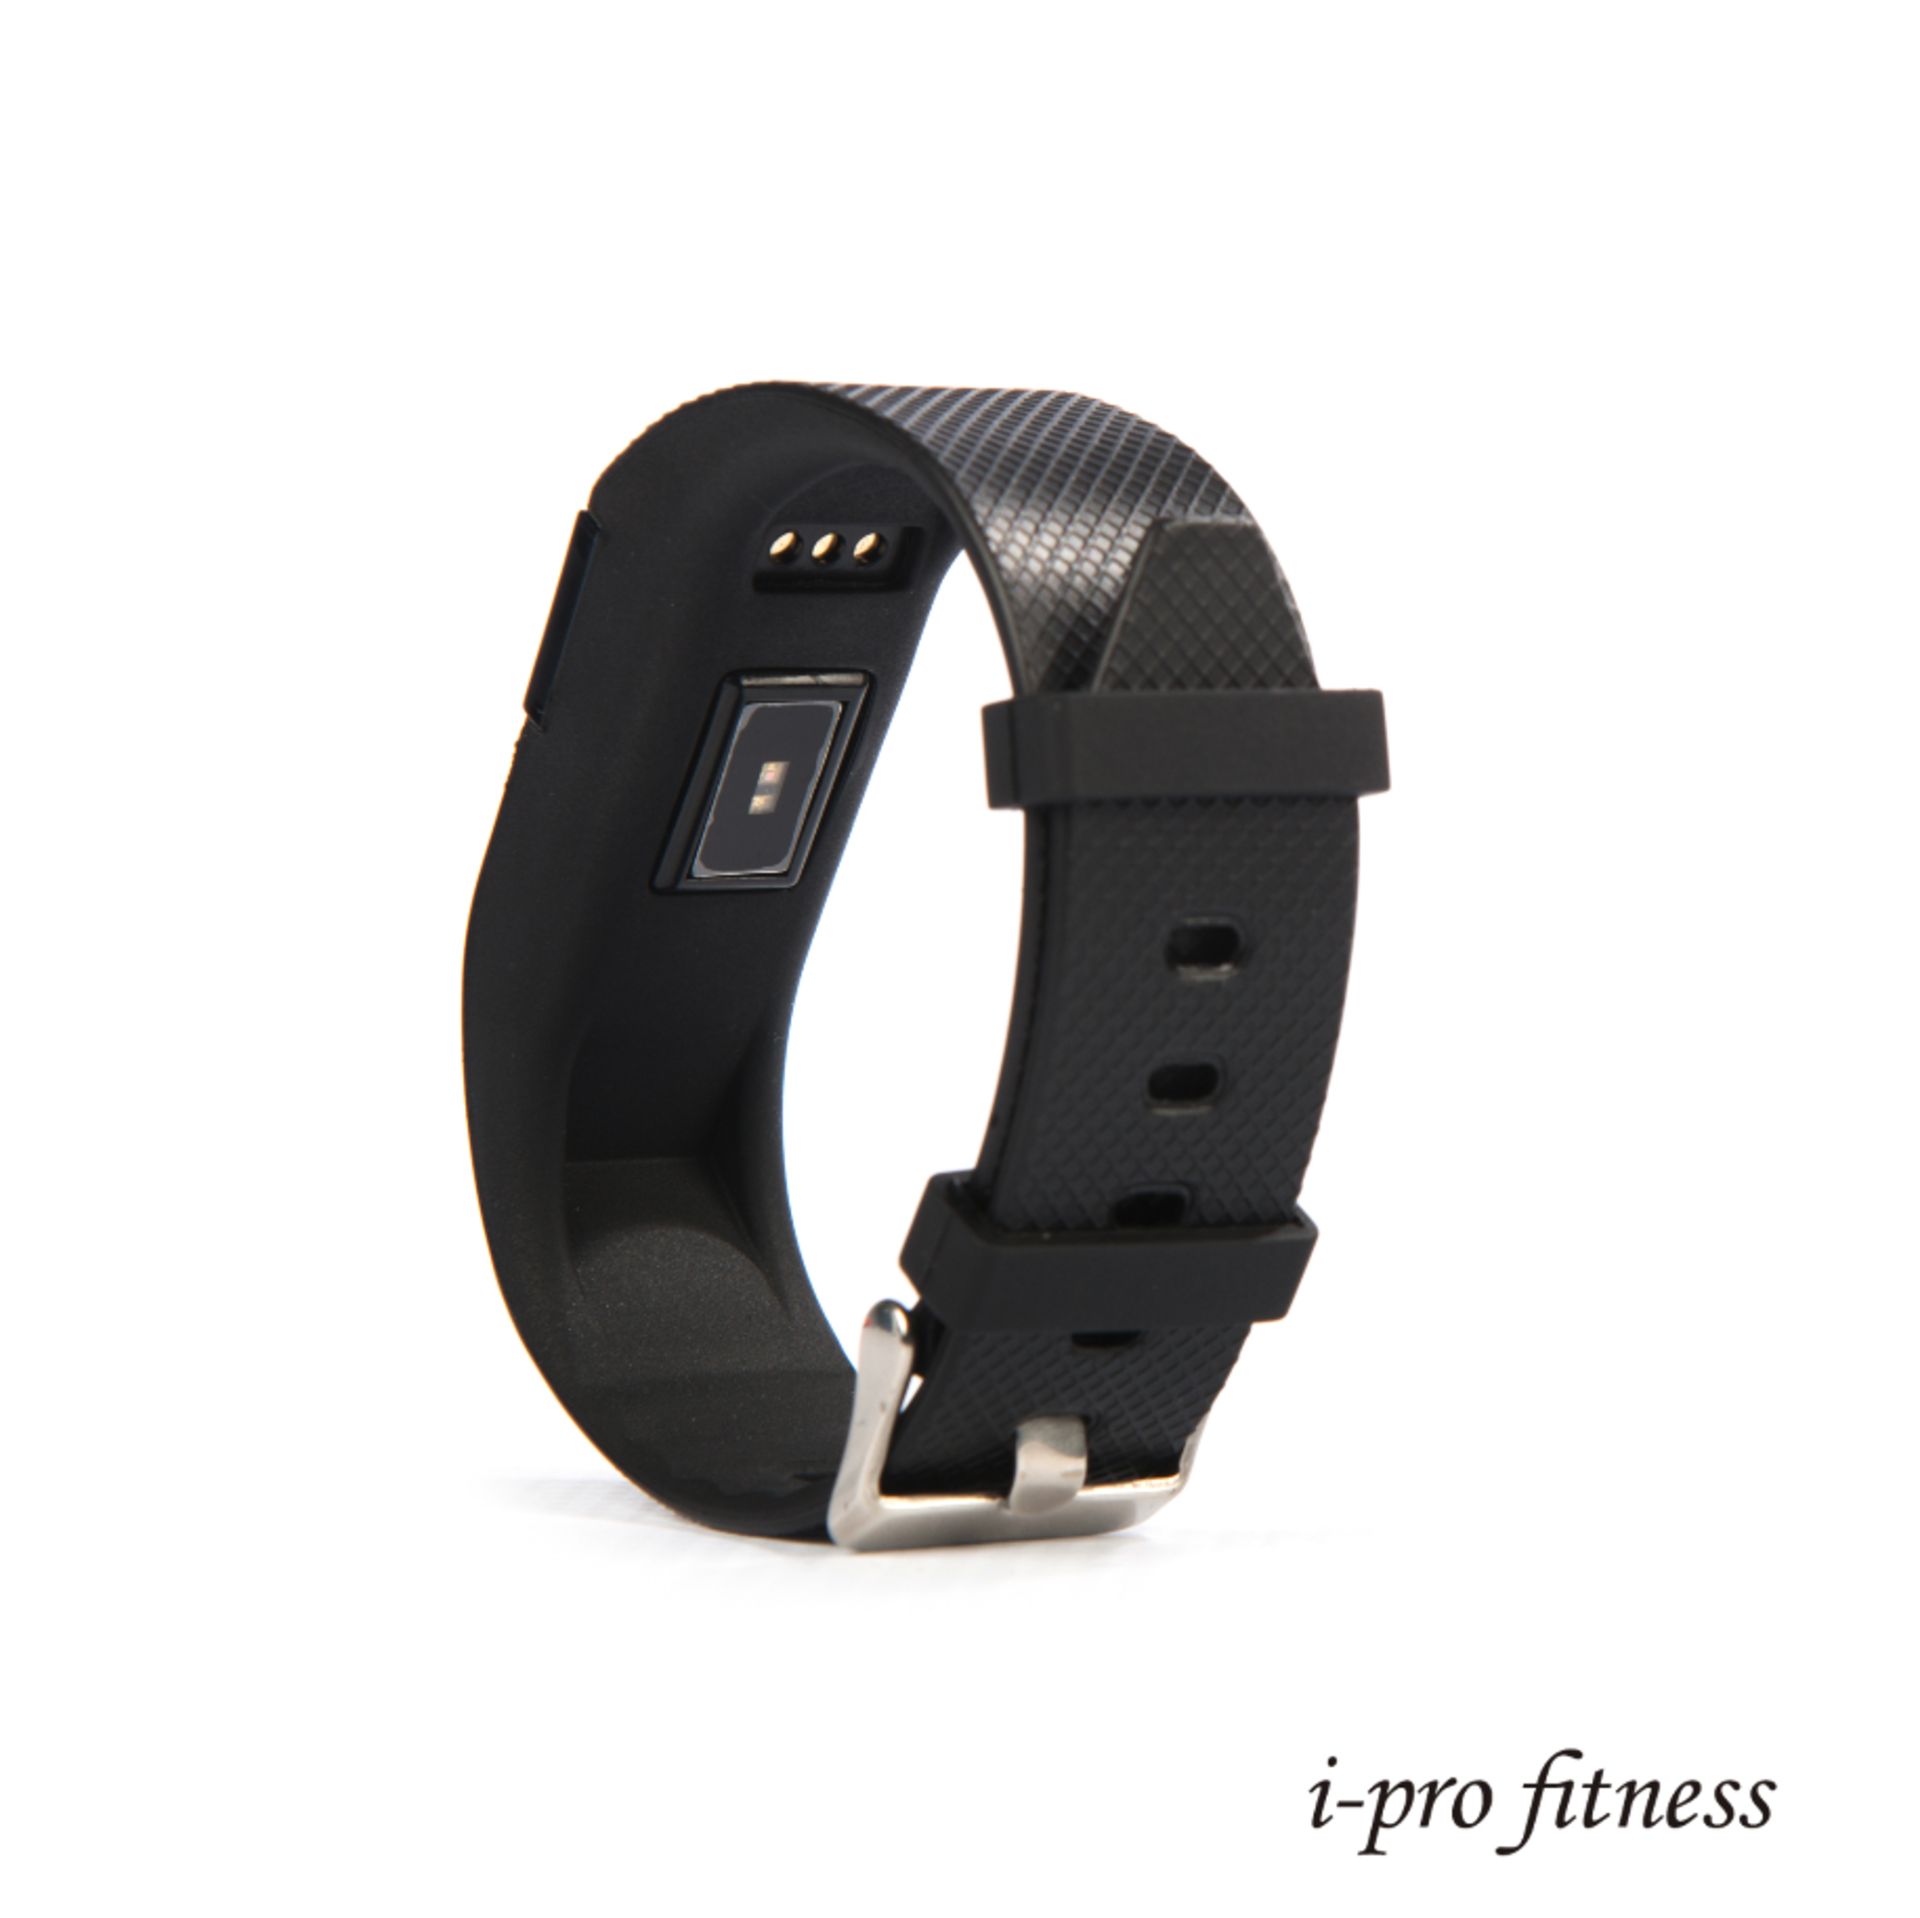 ***Trade lot 50 x Units Fitness Tracker i-pro fitness, Bluetooth 4.0 Sports Smart Bracelet*** - Image 3 of 8